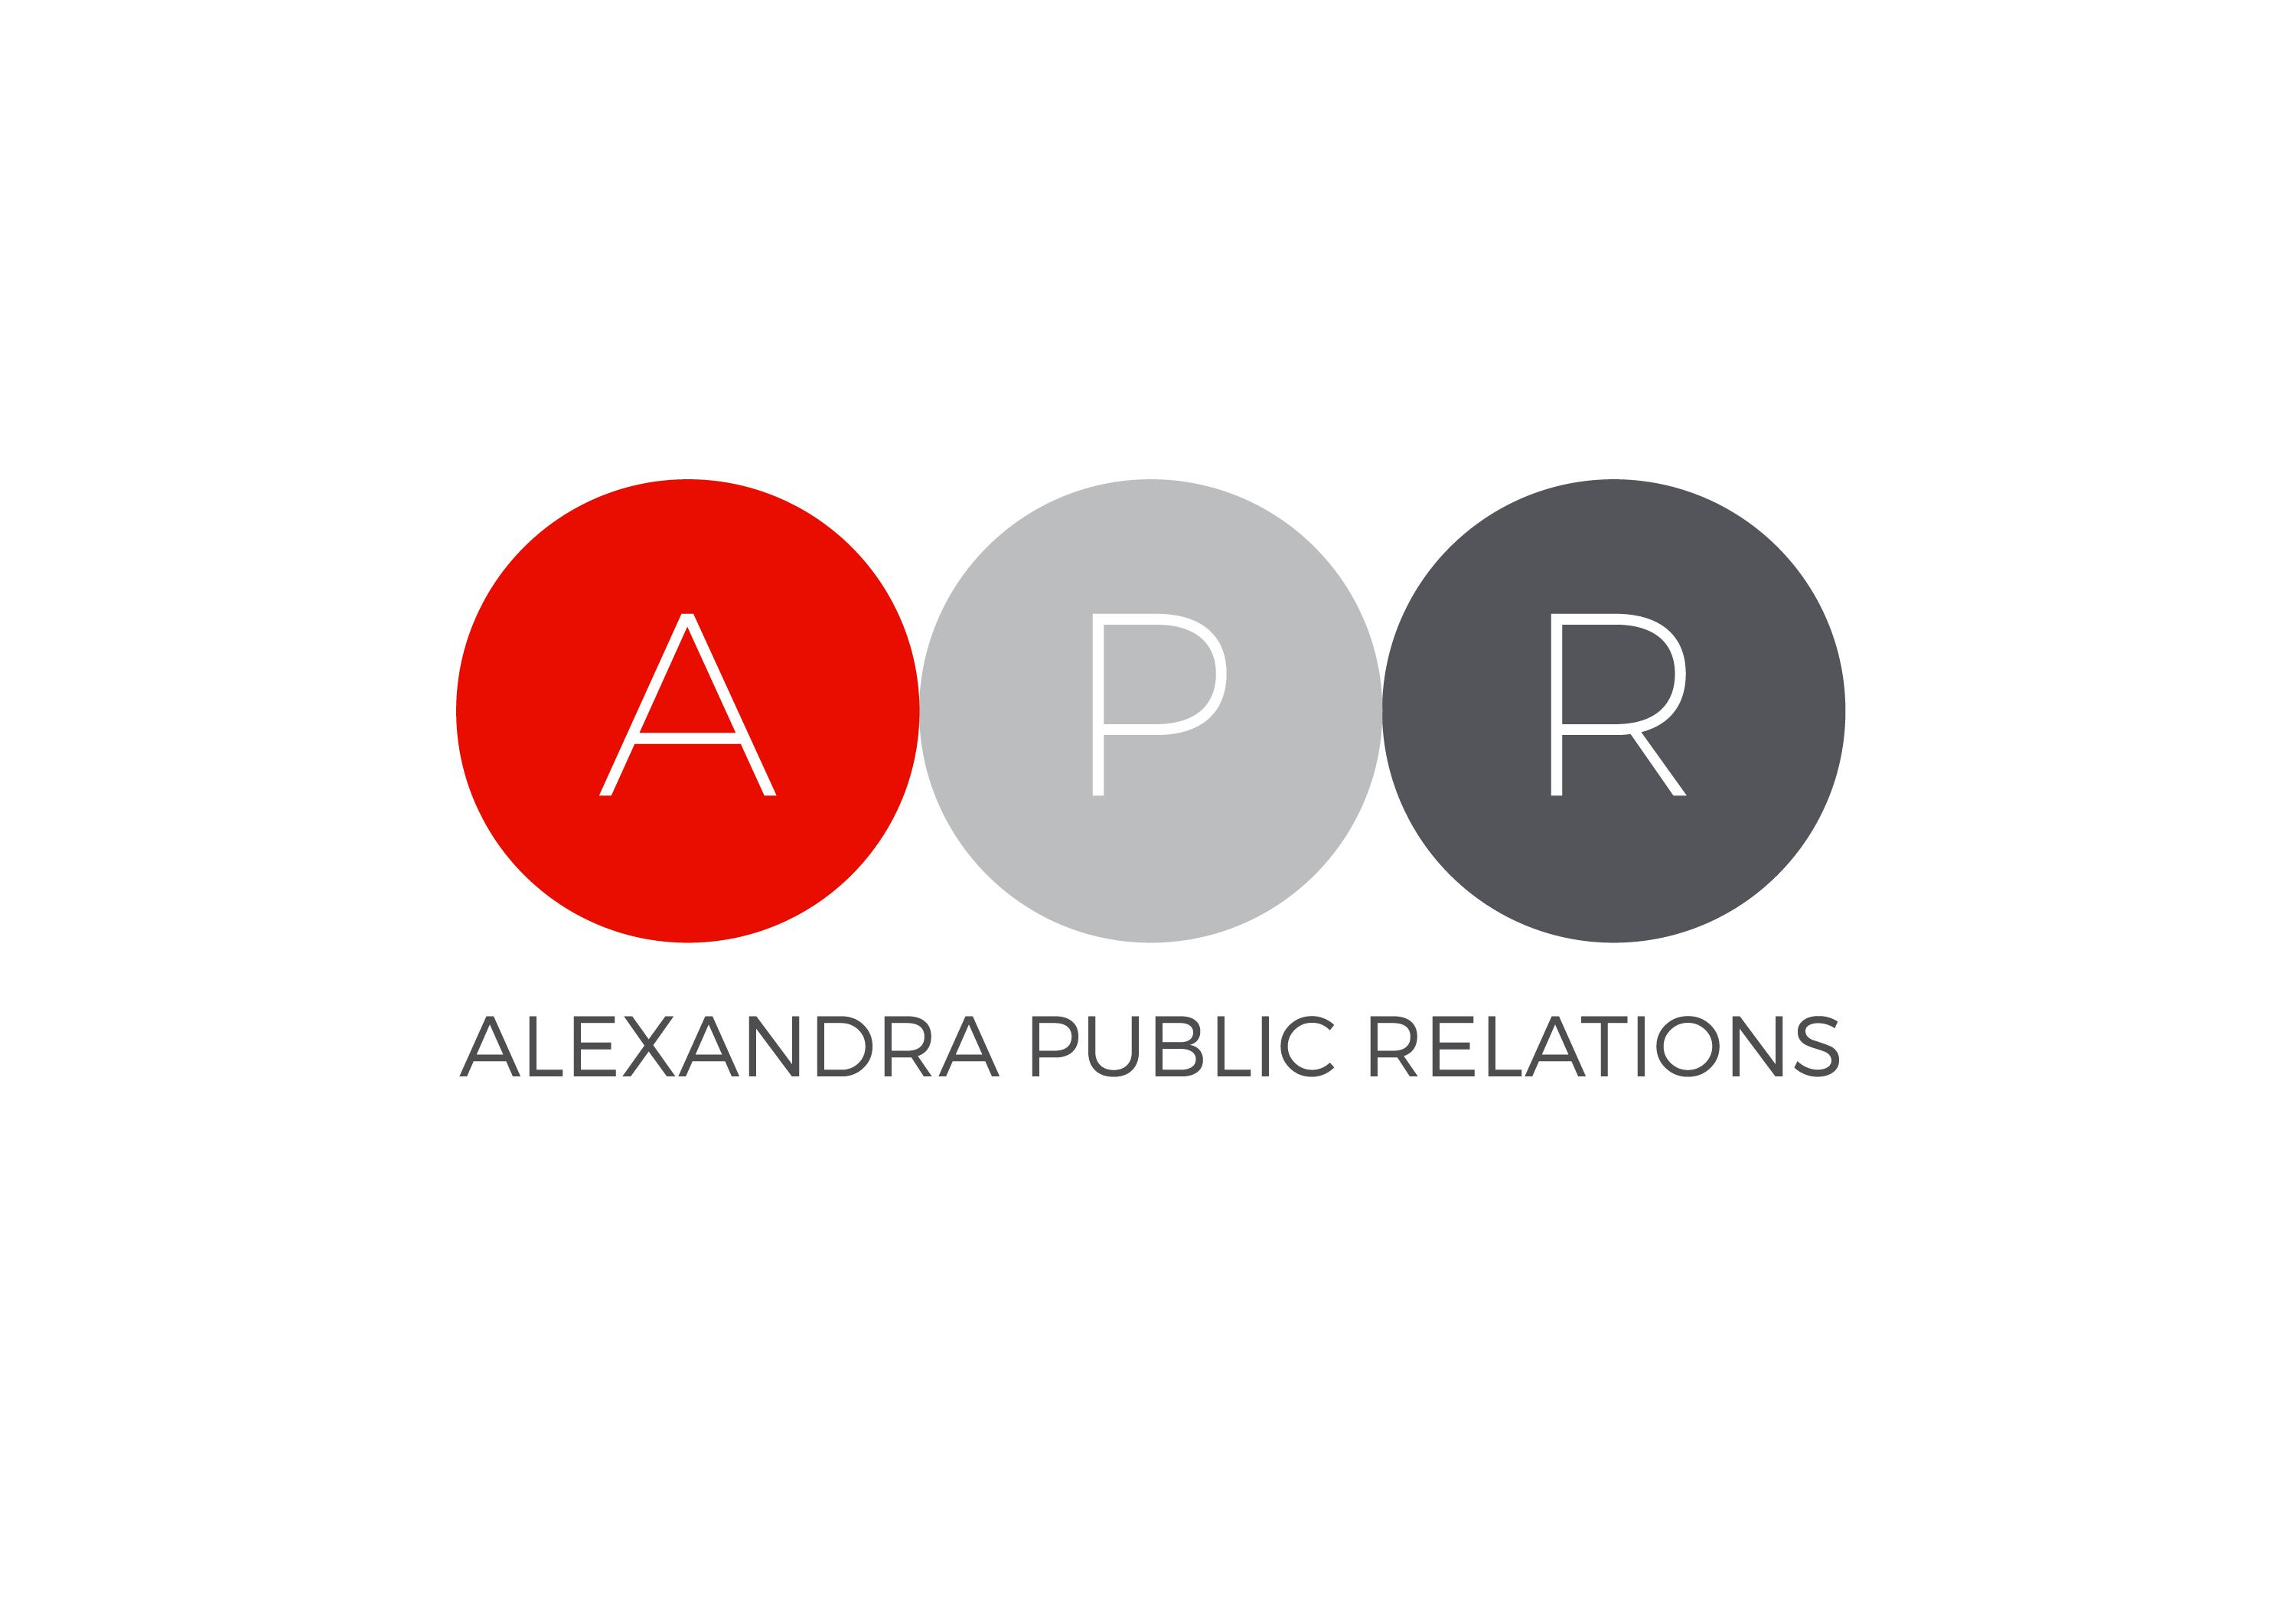 Alexandra Public Relations | Partenaire #jemefaisdepister